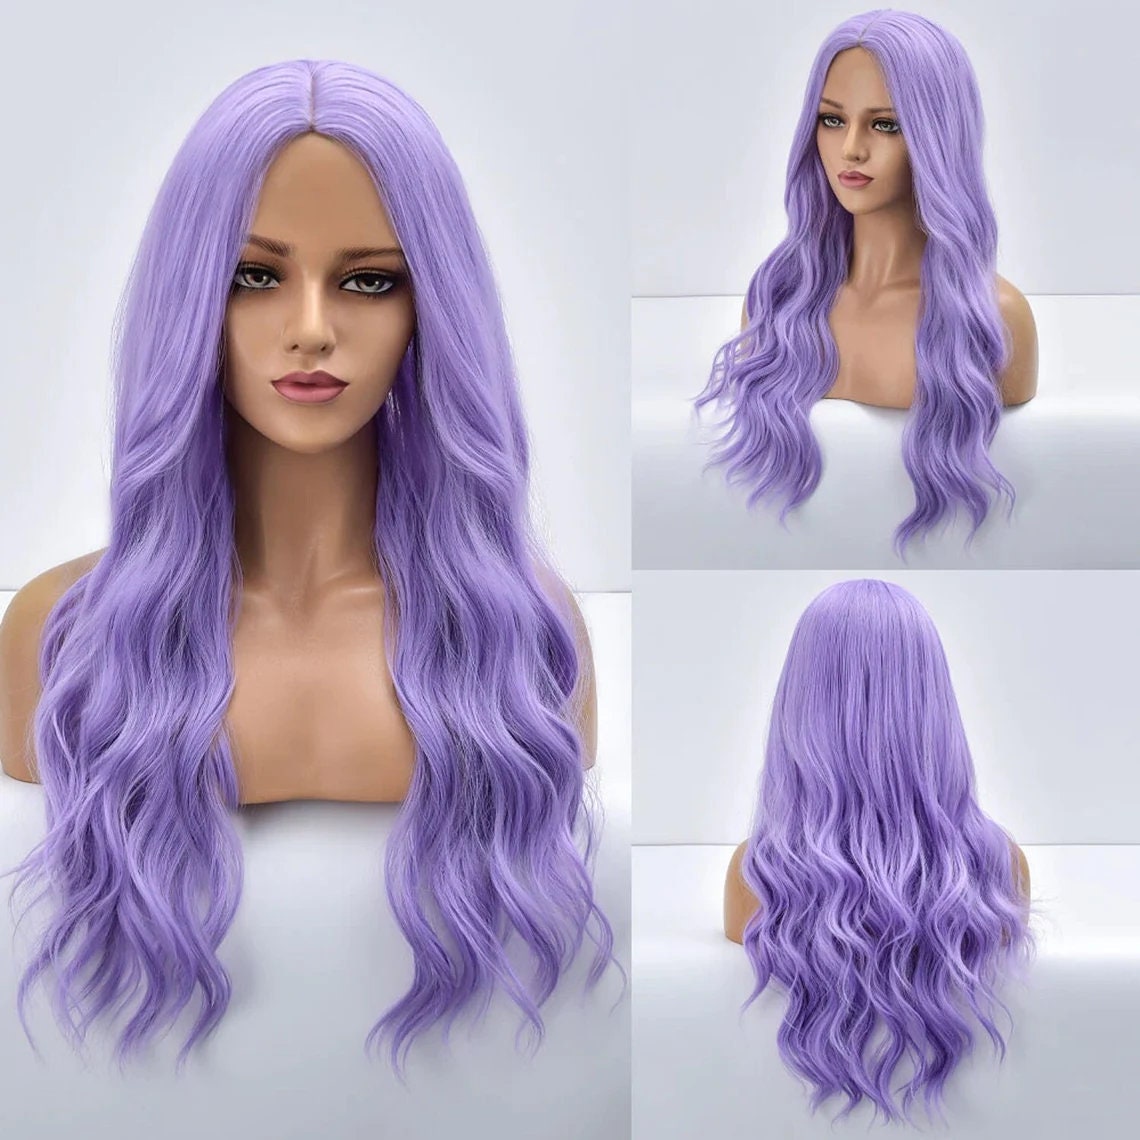 L-2 / SP37 Indigo Purple 75cm long straight wig . Heating Resistant fiber